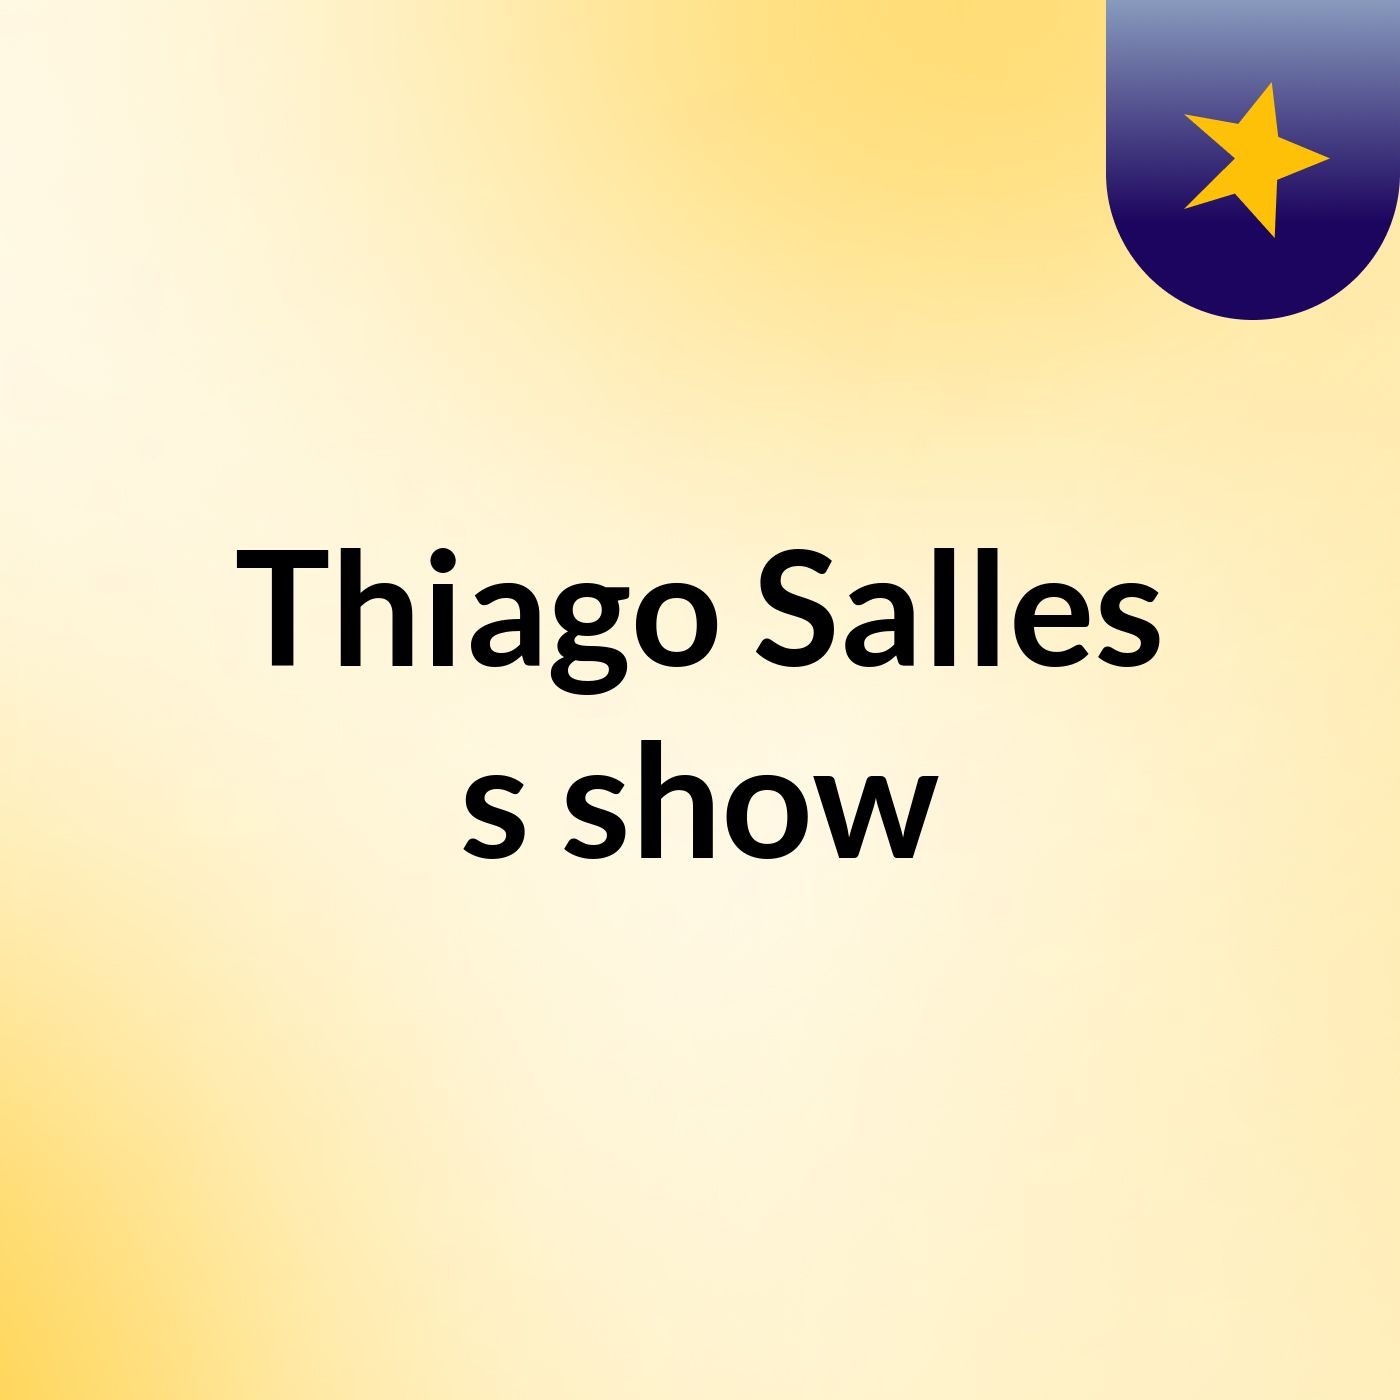 Thiago Salles's show